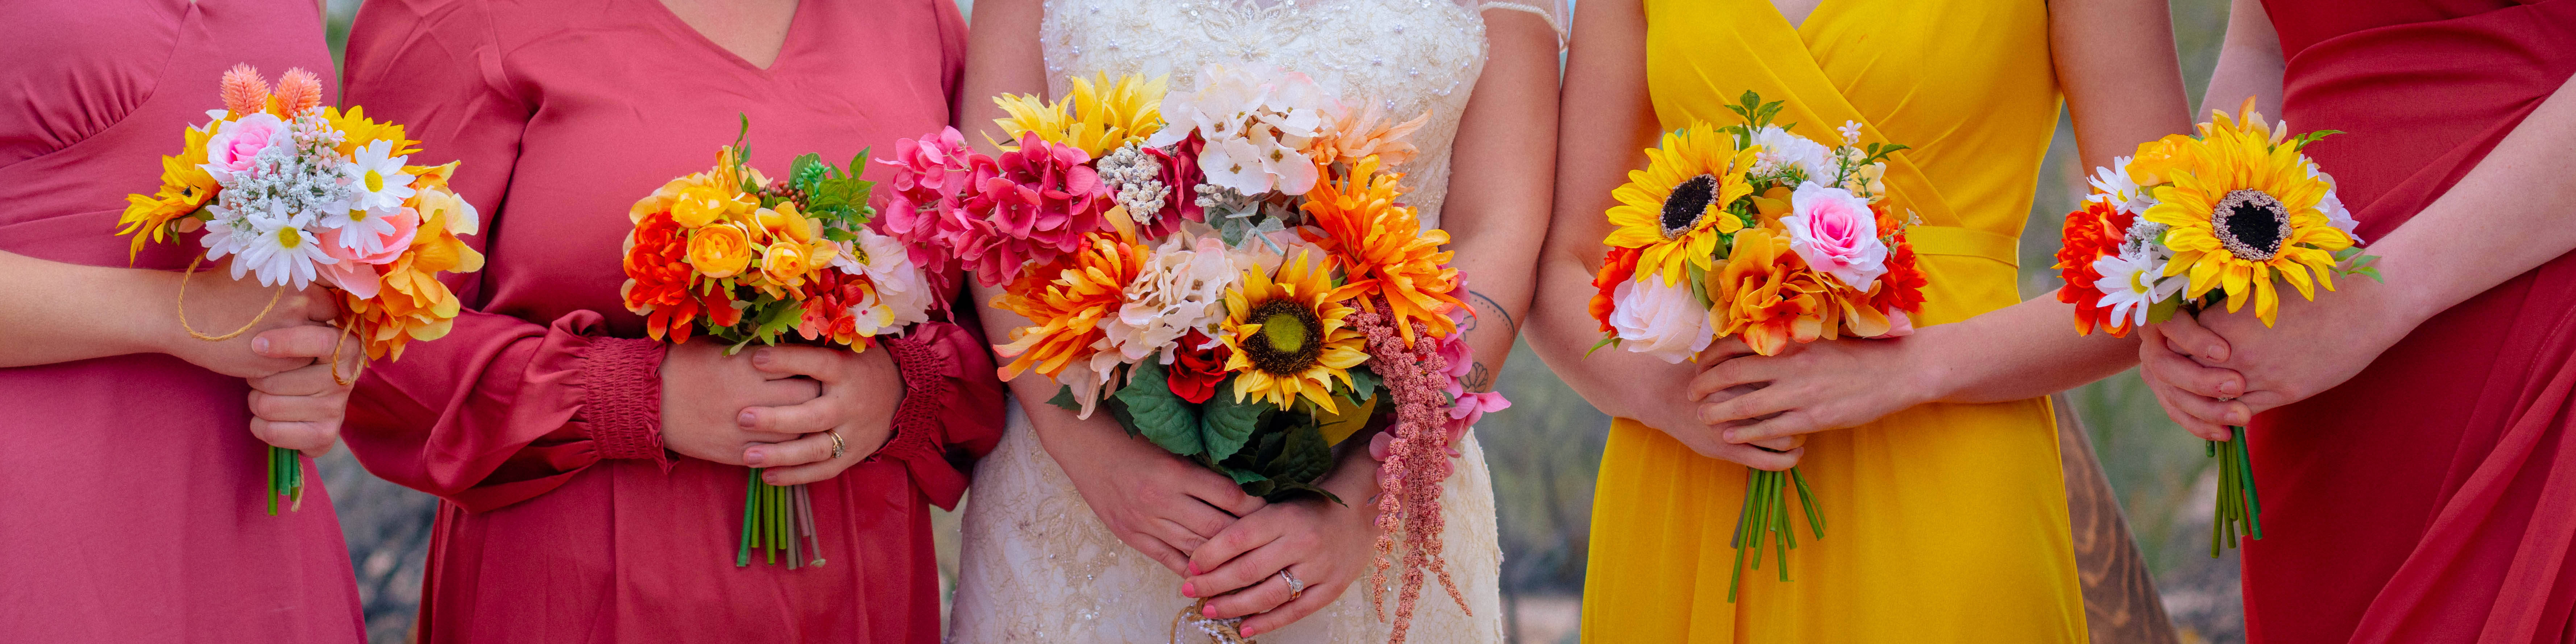 Bridesmaids With Sunflower Bouquet Background